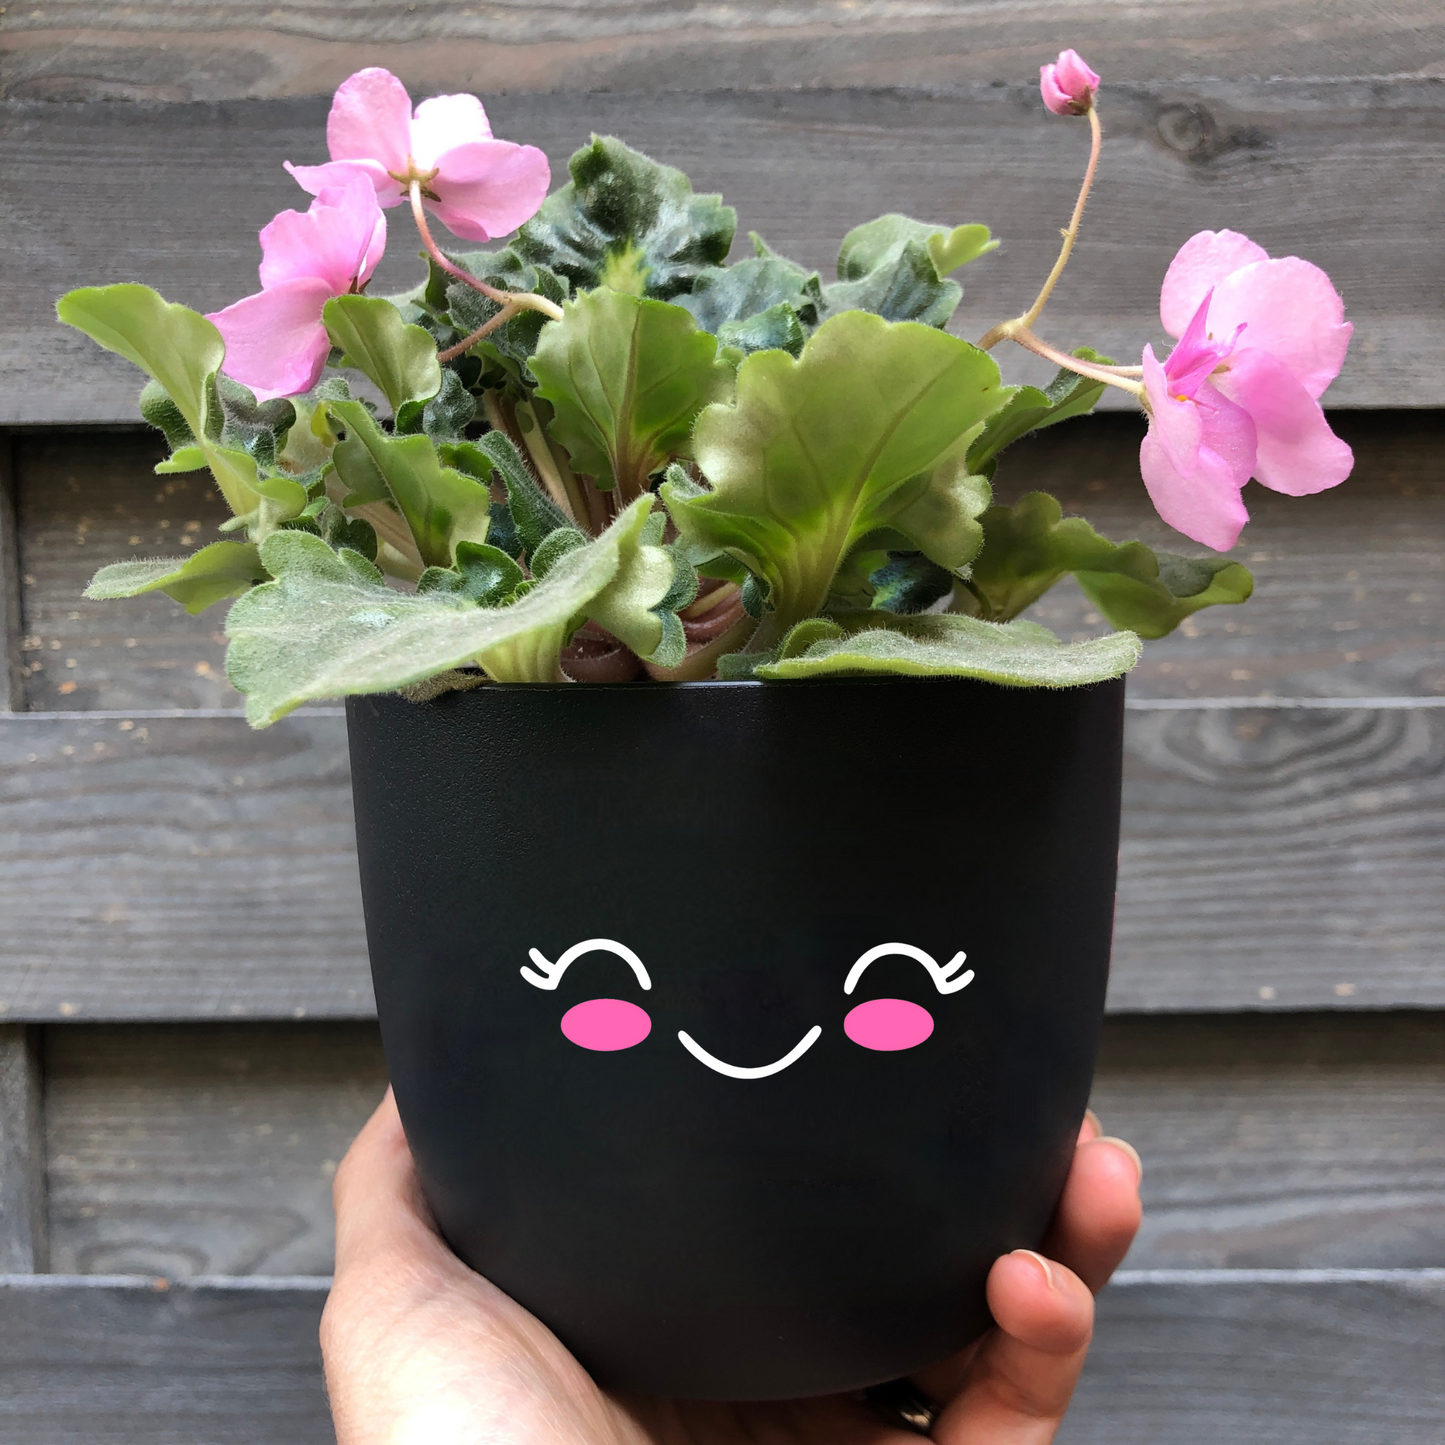 Flower pot face - gift flower lover - happy plant pot - planter cute face - face pot - gift idea personalized